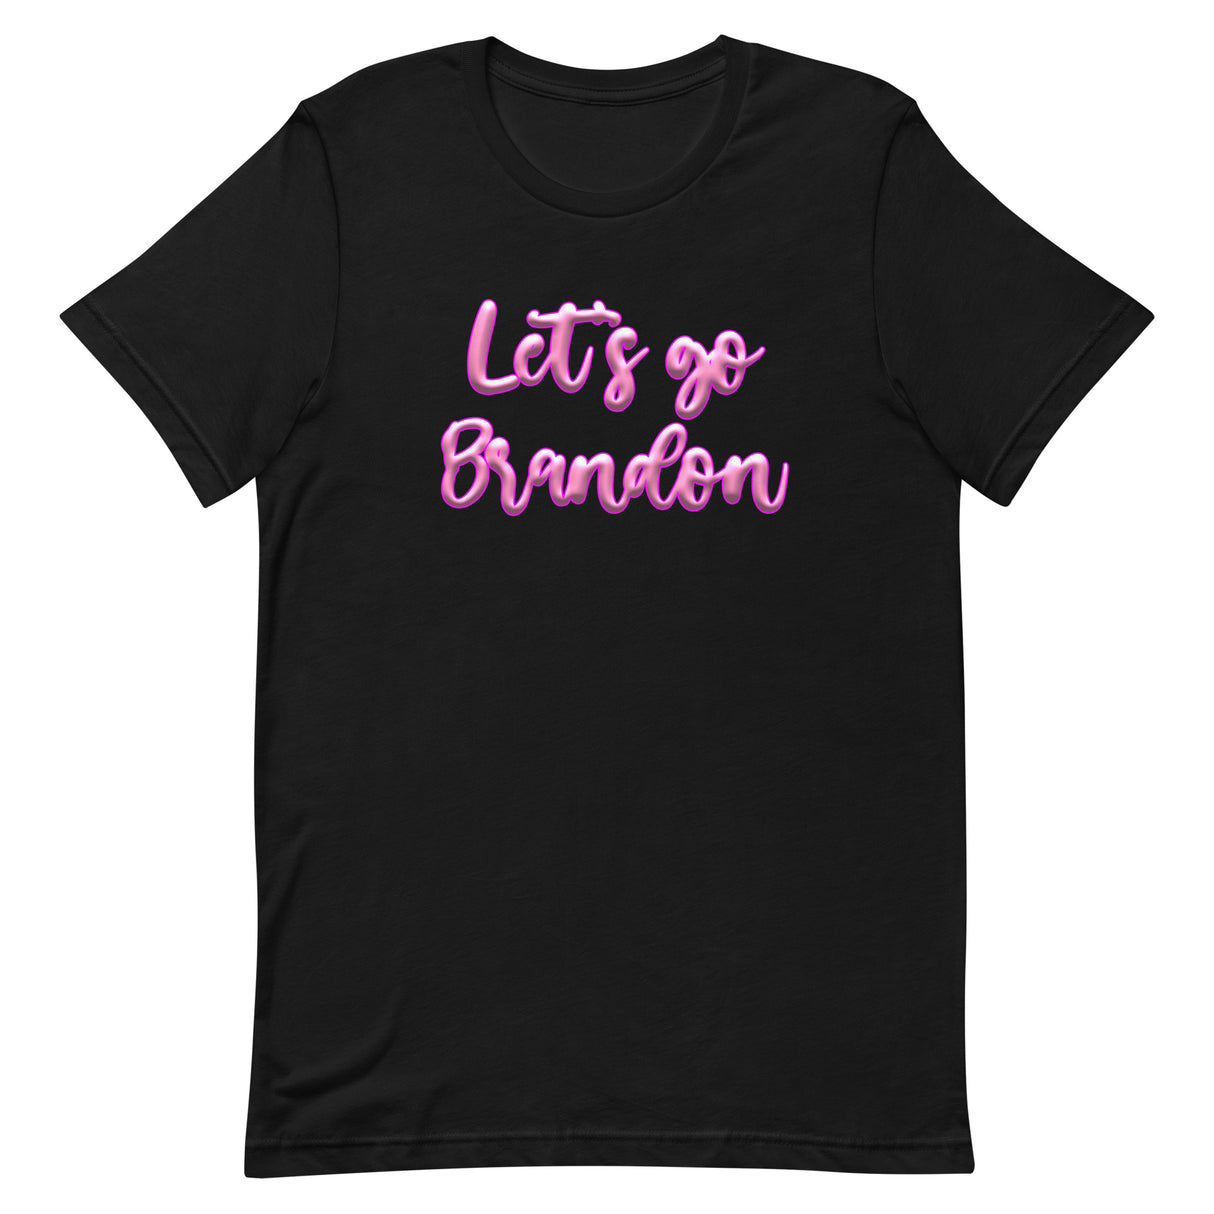 Let's Go Brandon Cotton Candy Shirt - Libertarian Country